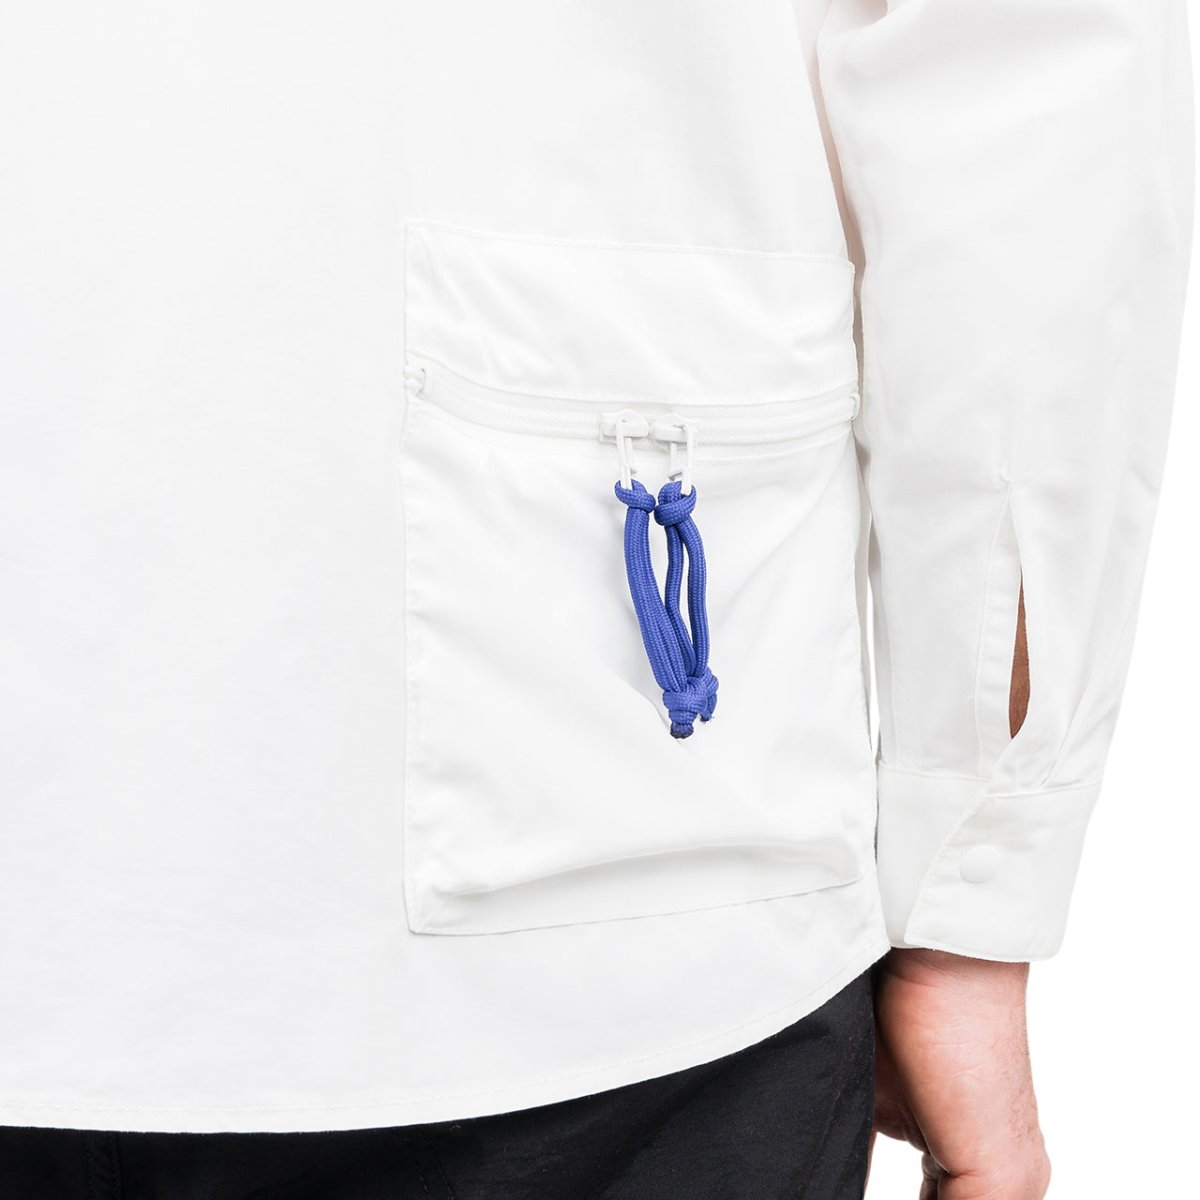 Liberaiders Multi Pocket T/C Shirt (Weiß)  - Allike Store